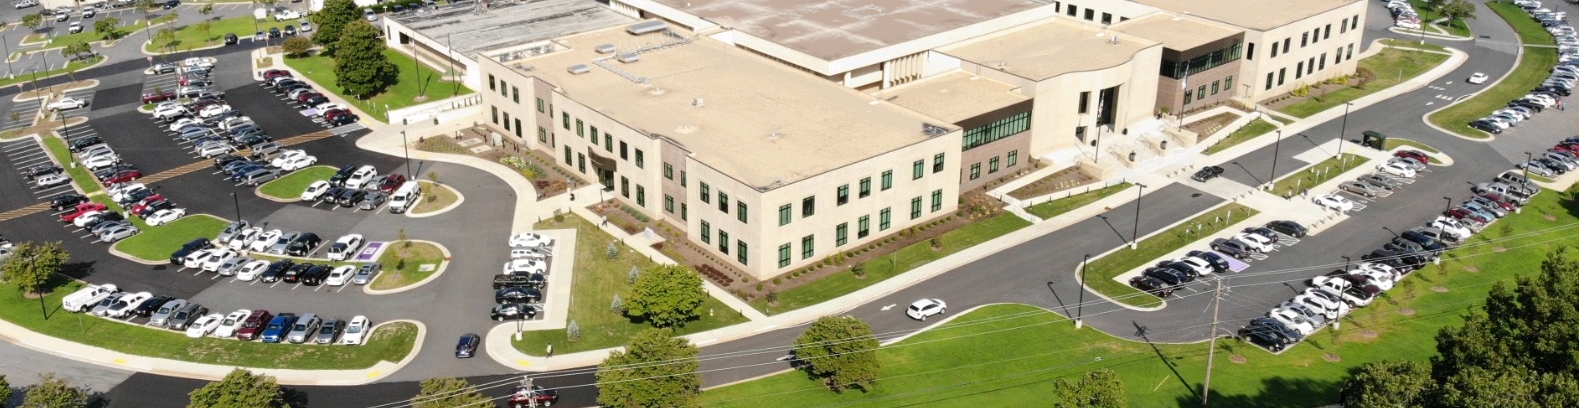 Newton Justice Center Drone Image